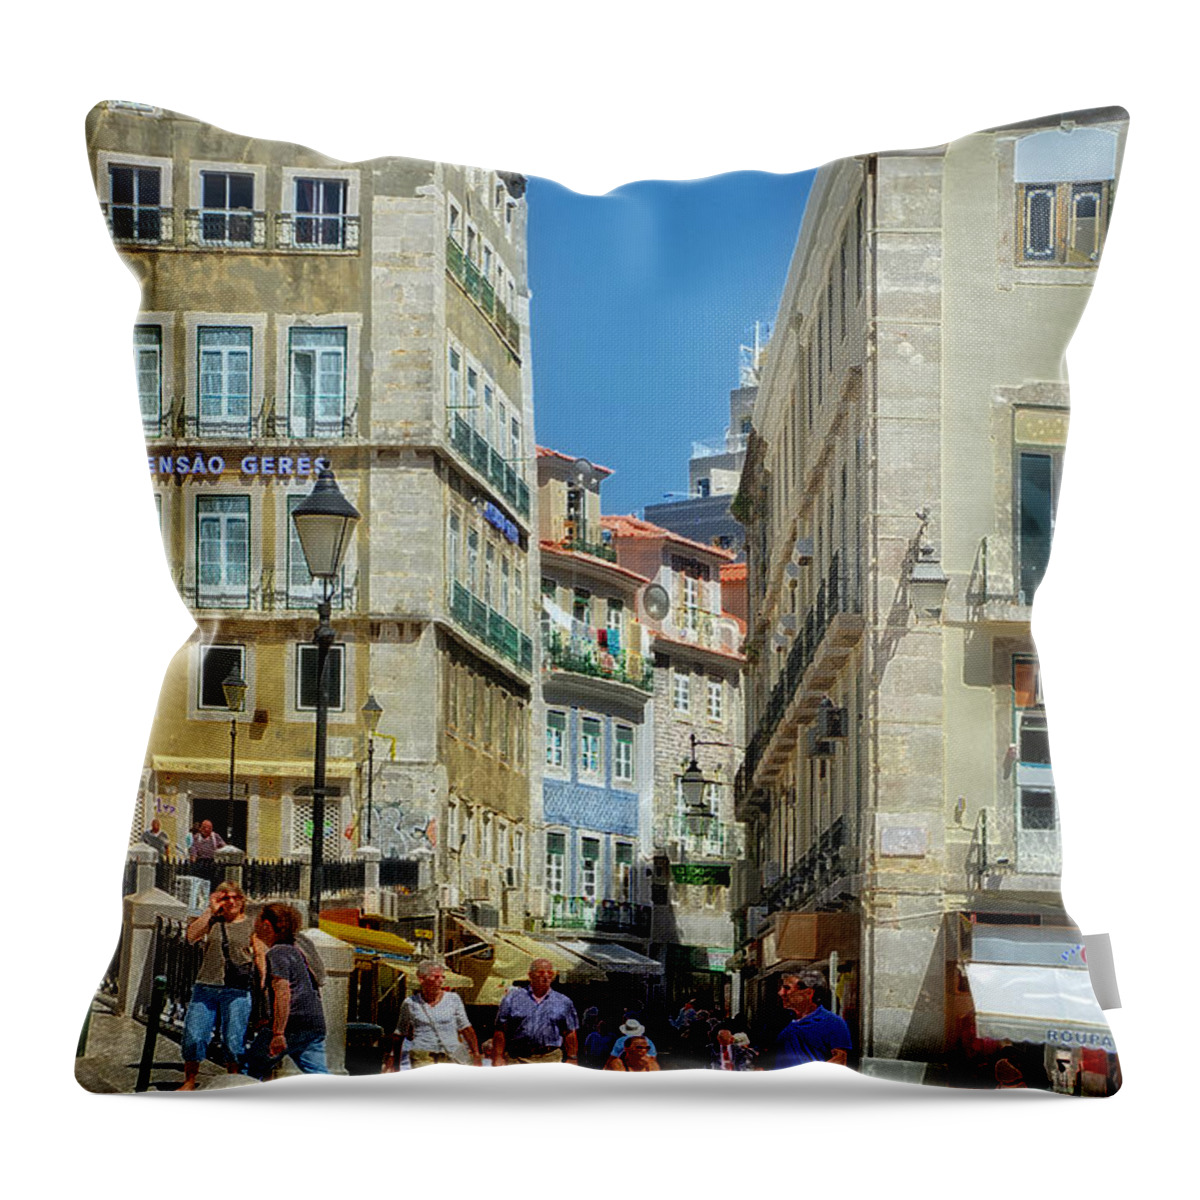 Pensao Geres Throw Pillow featuring the photograph Pensao Geres - Lisbon by Mary Machare